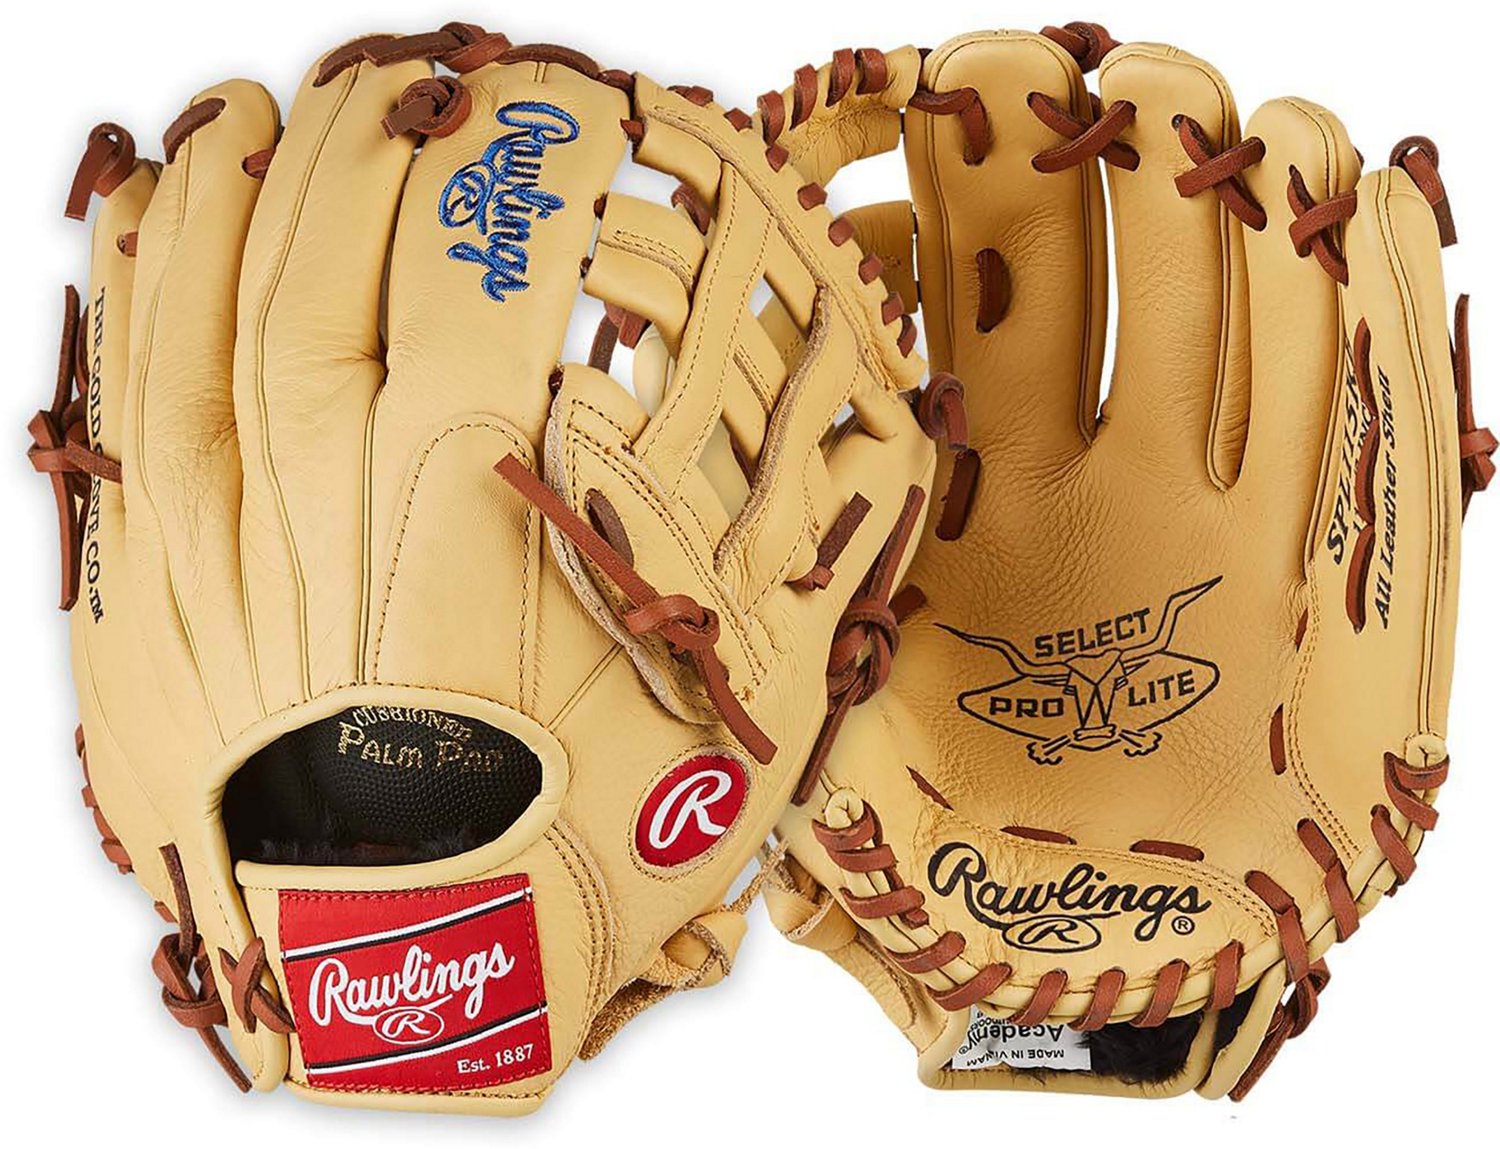  Rawlings, Select PRO Lite, guantes de béisbol